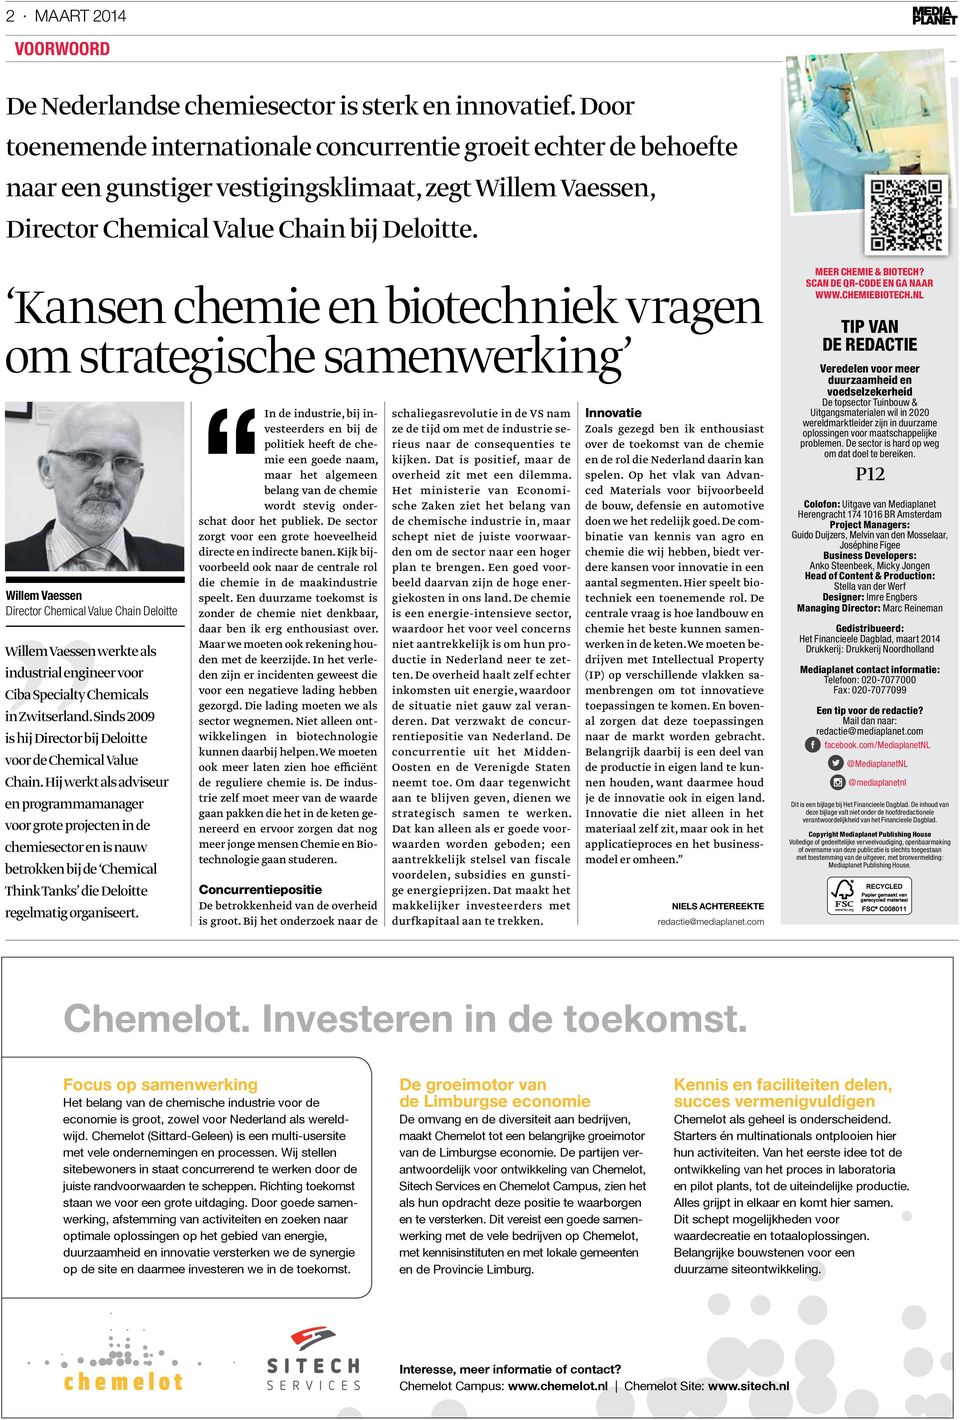 Kansen chemie en biotechniek vragen om strategische samenwerking Willem Vaessen Director Chemical Value Chain Deloitte Willem Vaessen werkte als industrial engineer voor Ciba Specialty Chemicals in